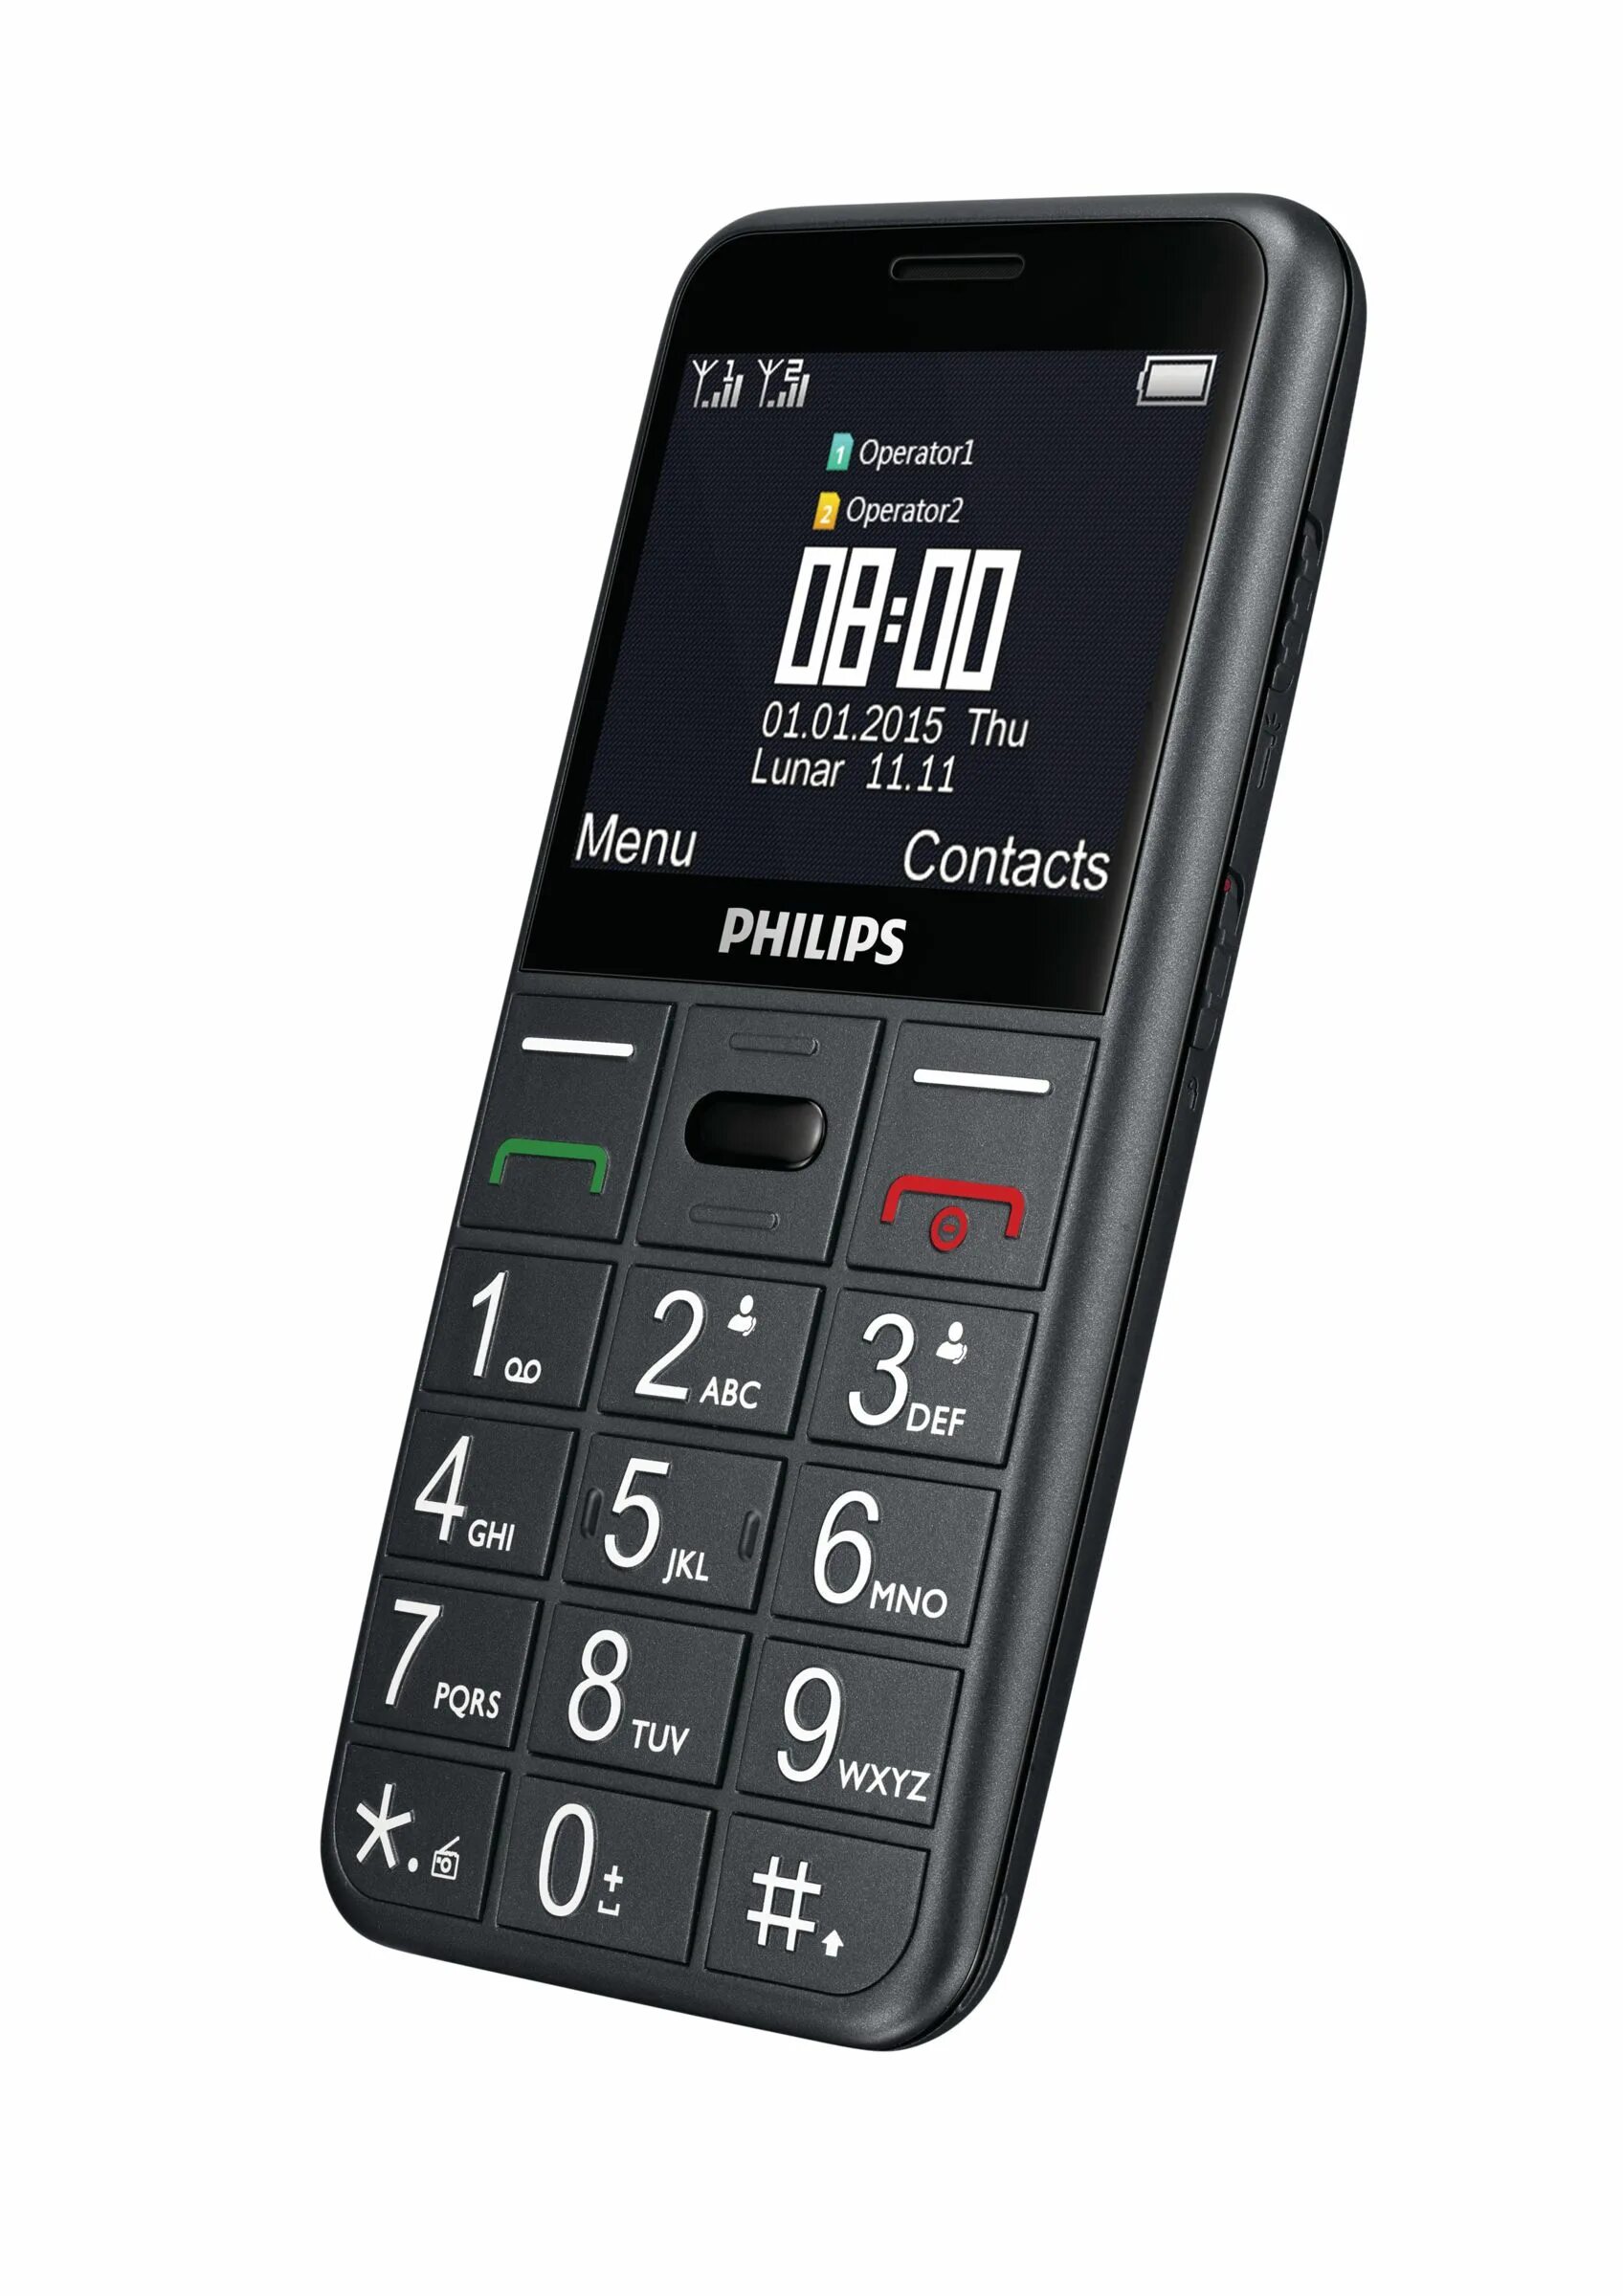 Philips Xenium e311. Philips Xenium бабушкофон. Philips Xenium с большими кнопками и экраном. Кнопочный телефон Филипс с большими кнопками. Филипс телефон кнопка